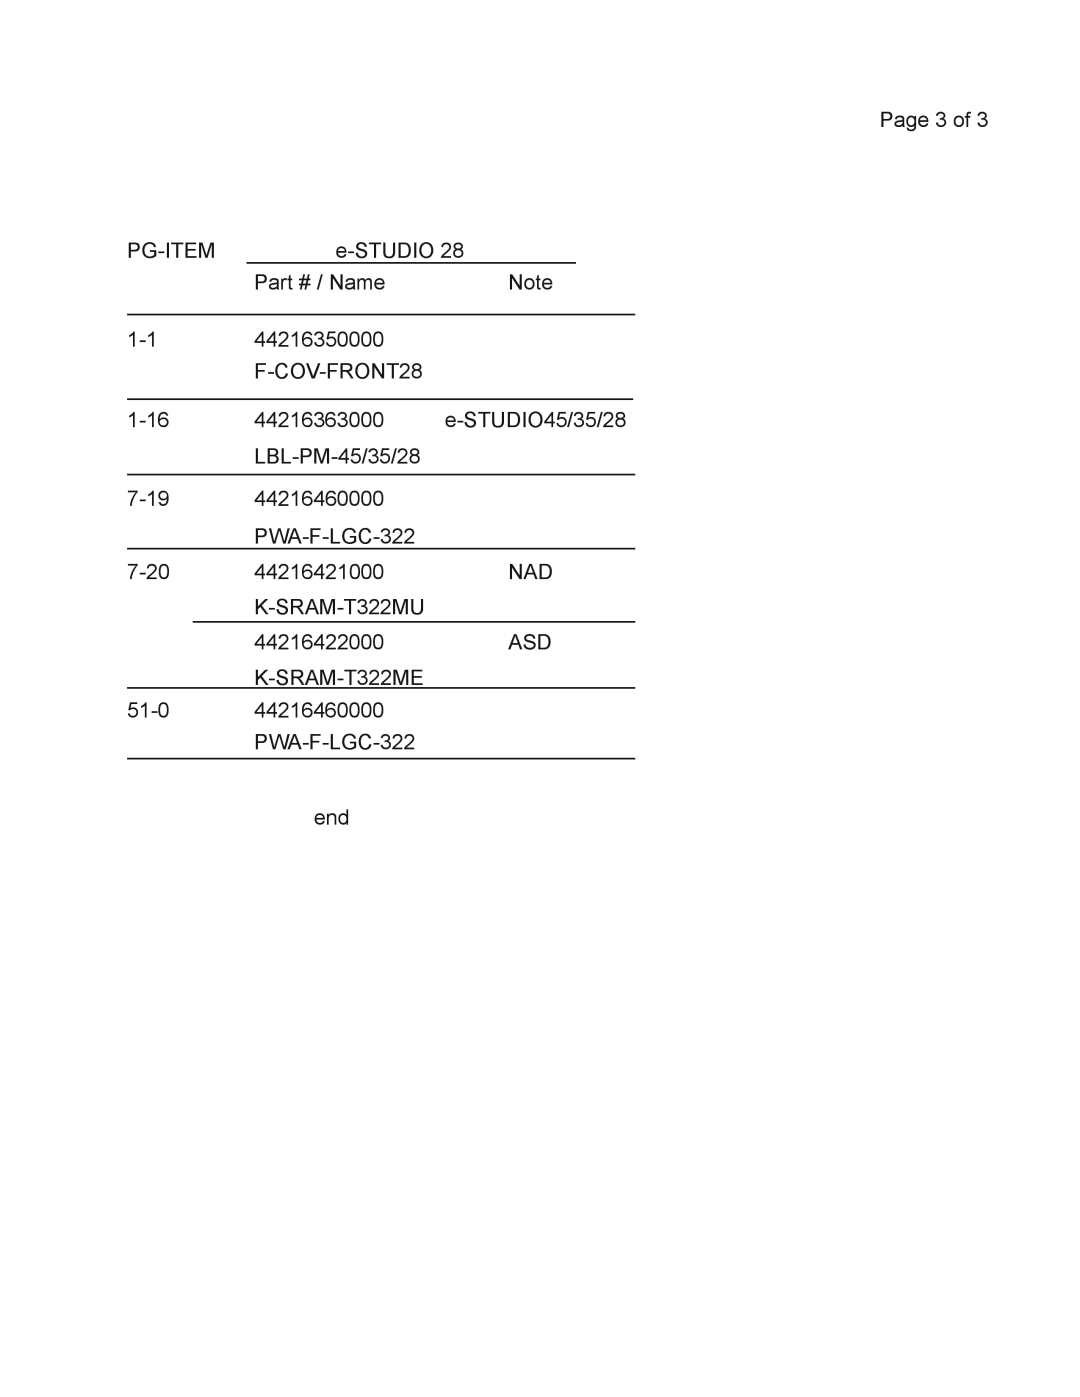 Toshiba Page 3 of, Pg-Item, Name, 44216350000, F-COV-FRONT28, 1-16, 44216363000, e-STUDIO45/35/28, LBL-PM-45/35/28 